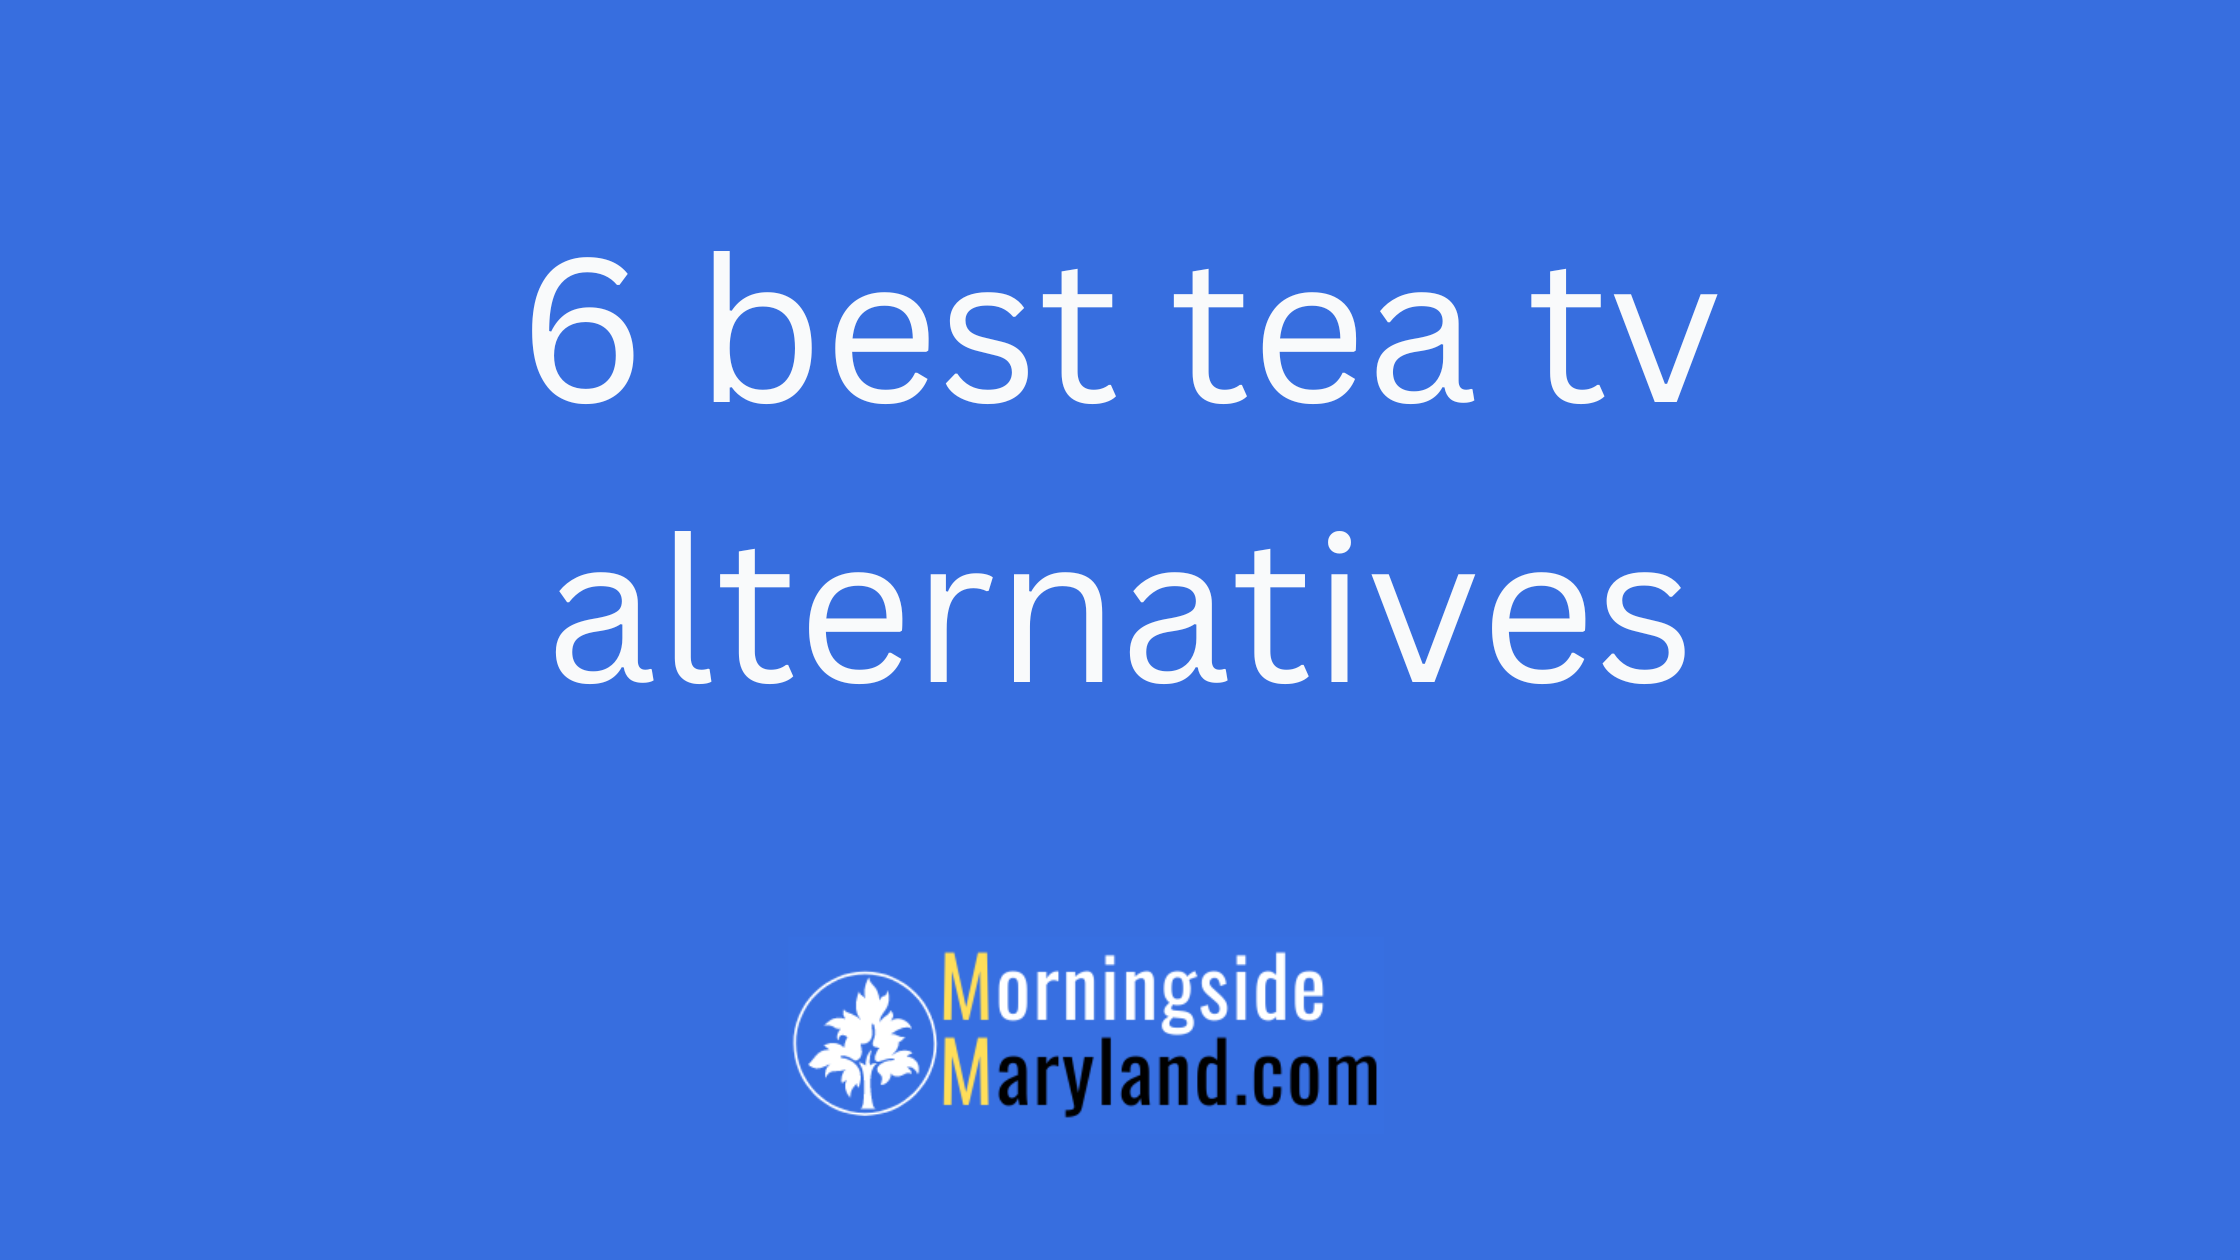 6 best tea tv alternatives